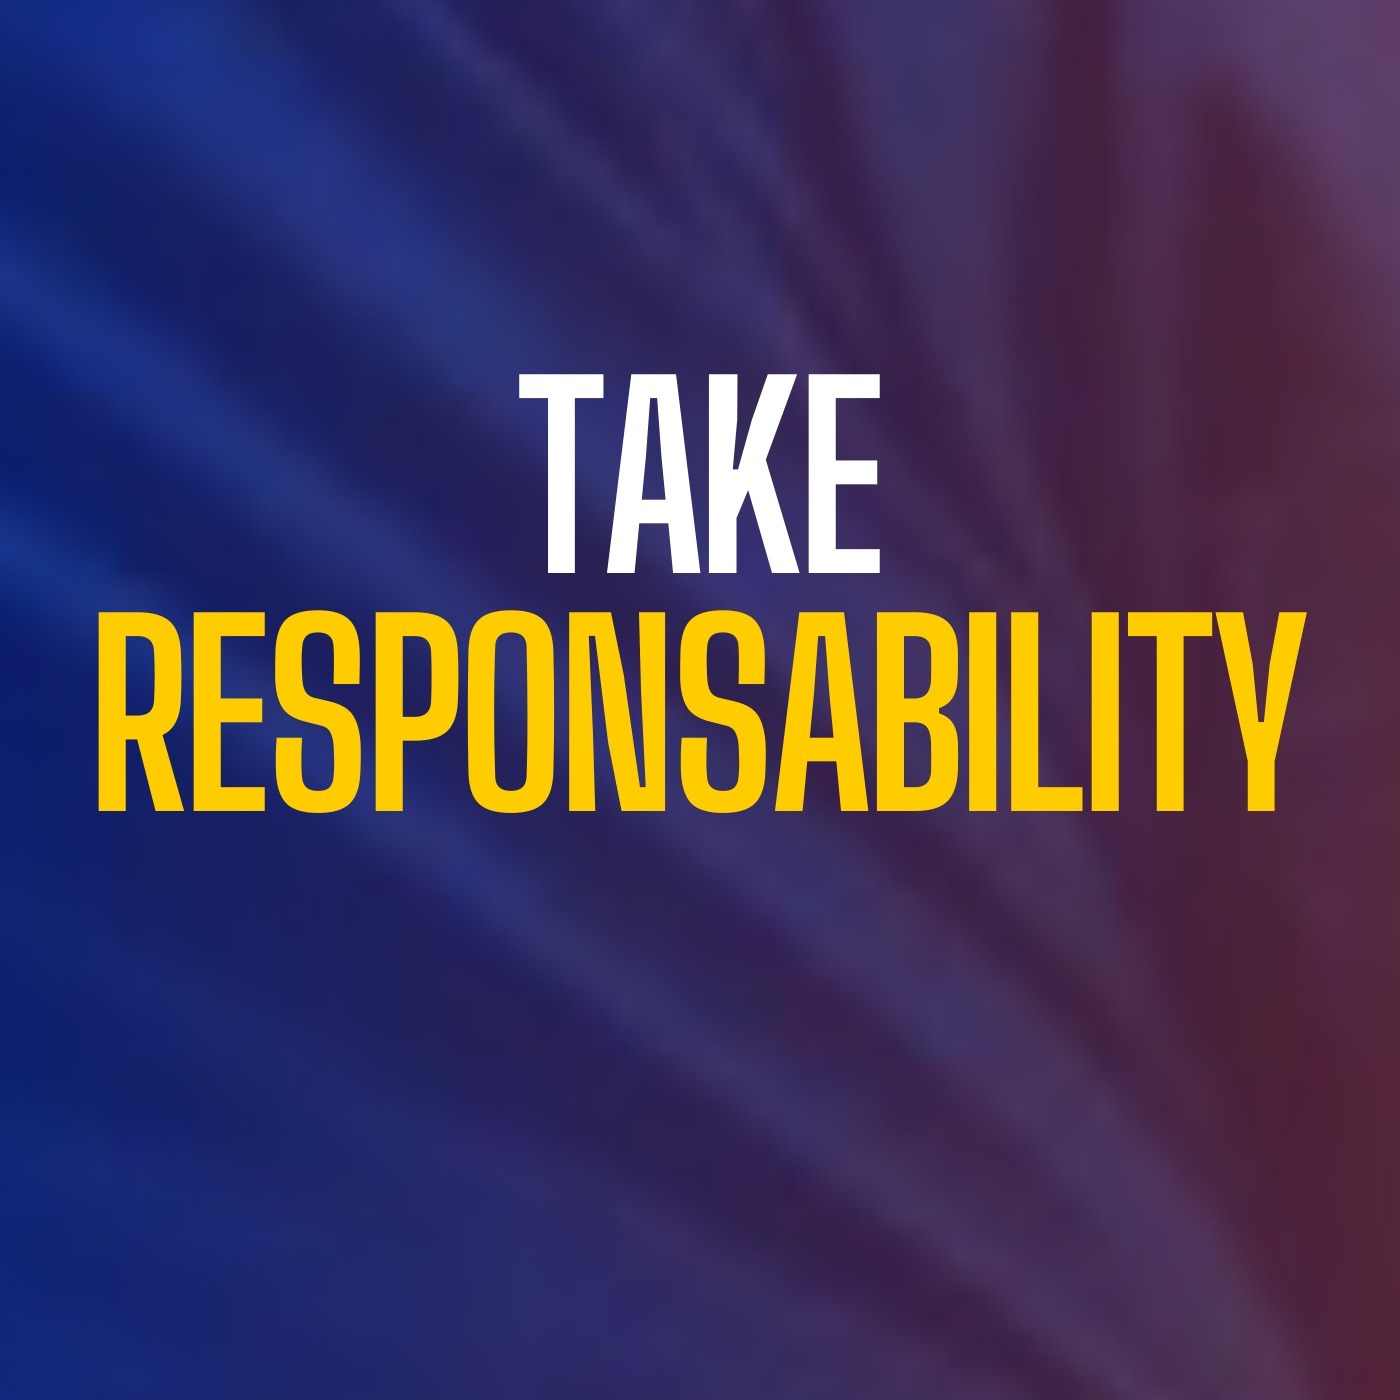 TAKE RESPONSIBILITY - Andrew Tate Motivational Speech